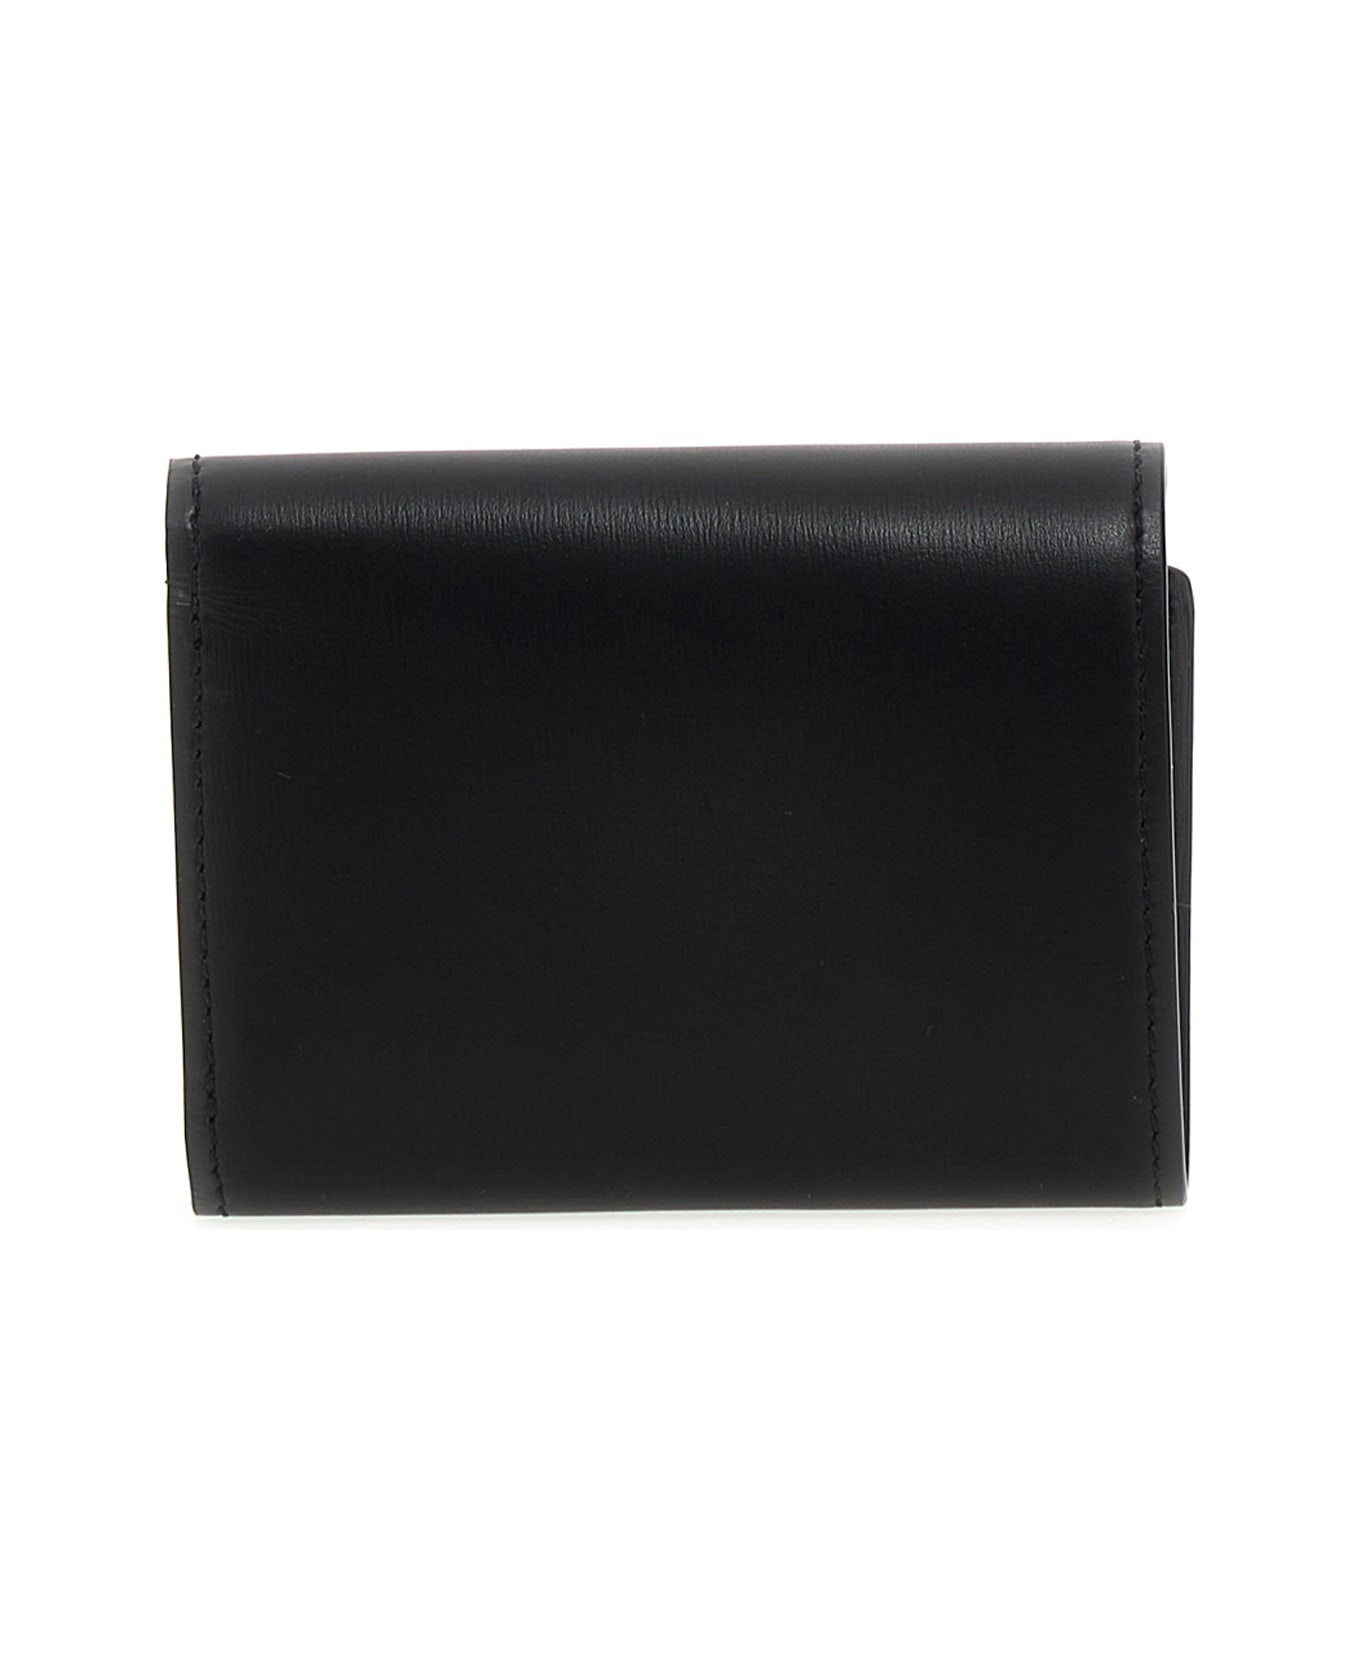 BOYY Portafoglio 'compact' - Black   財布